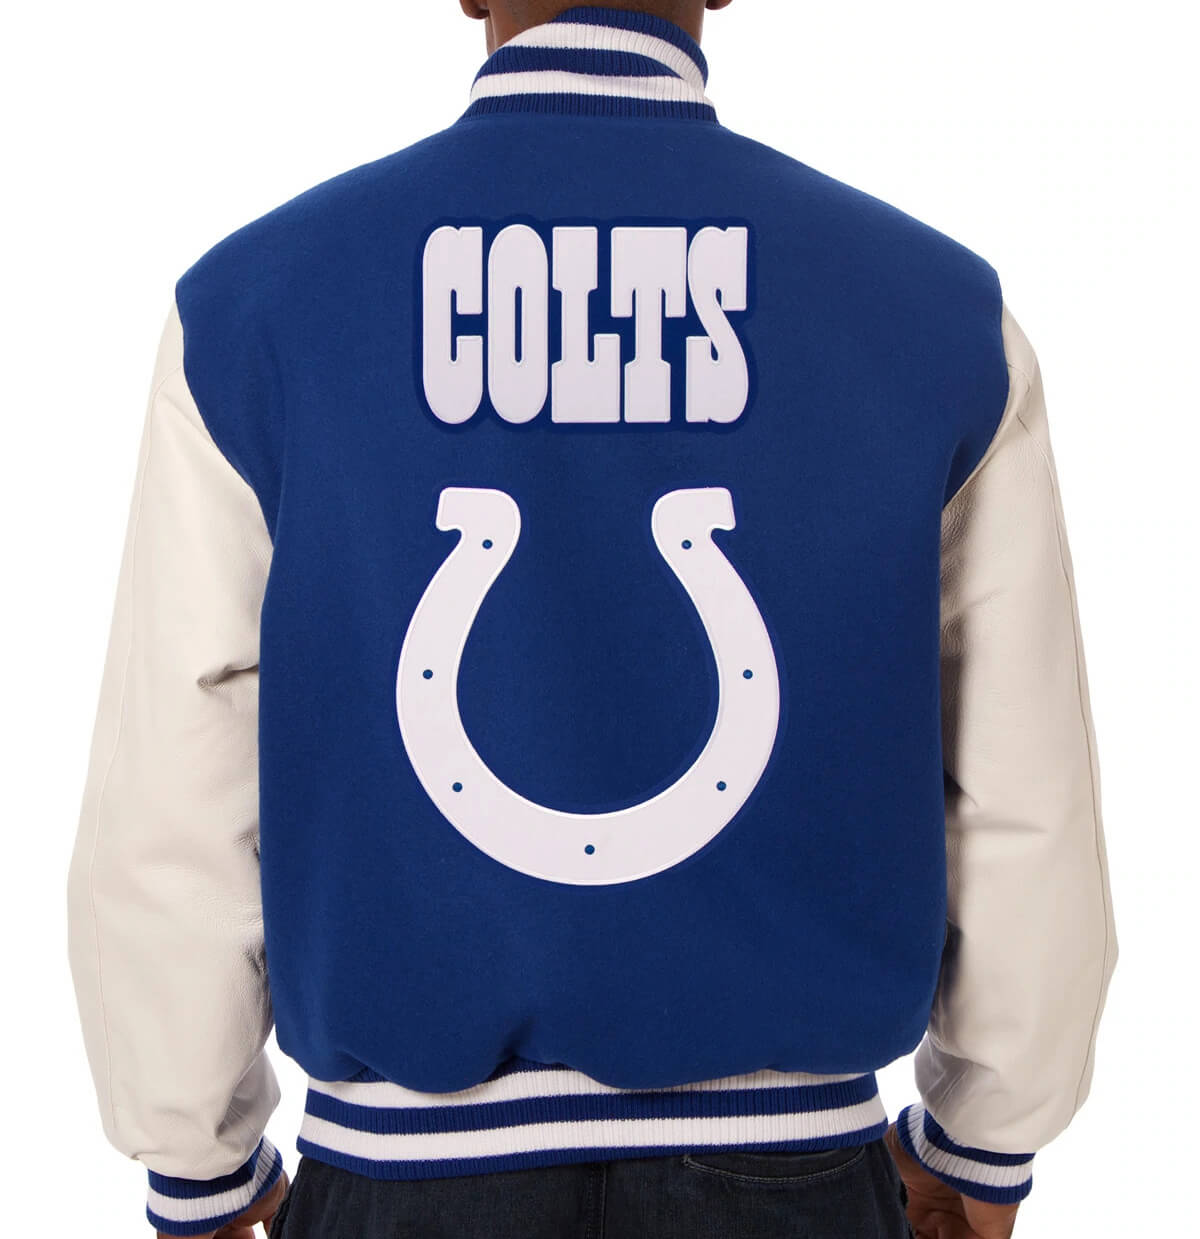 Indianapolis Colts NFL Blue And White Varsity Jacket - Maker of Jacket